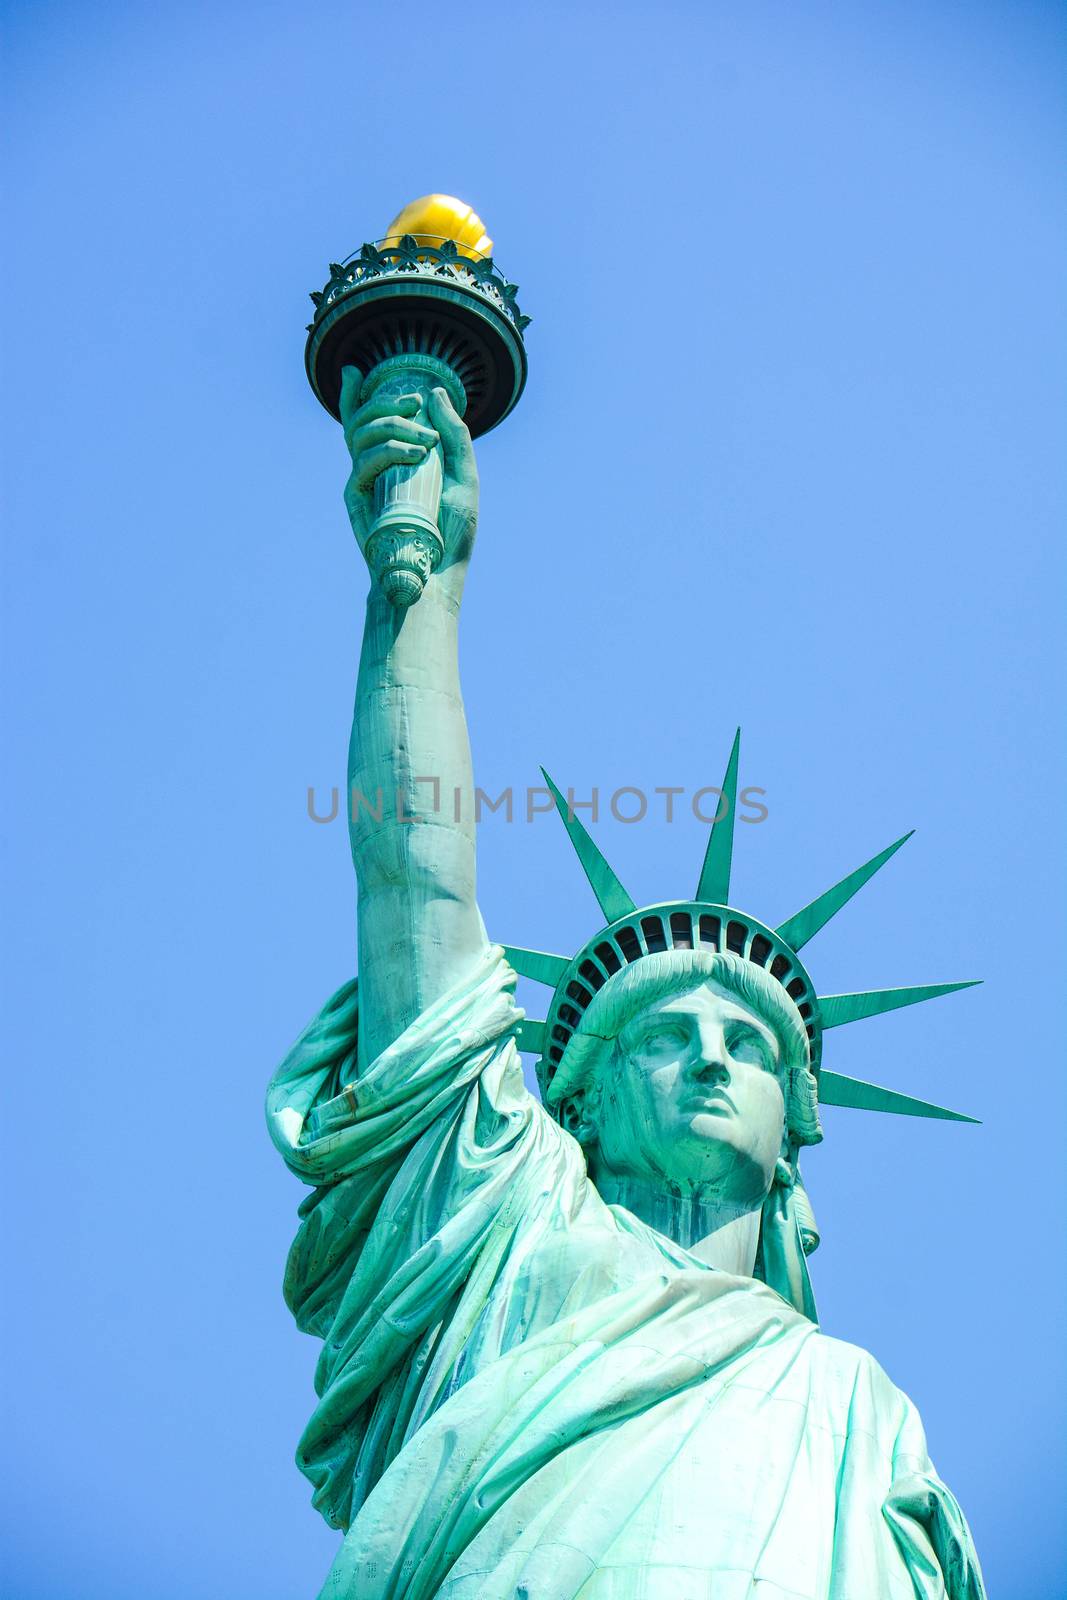 Statue of liberty by iacobino